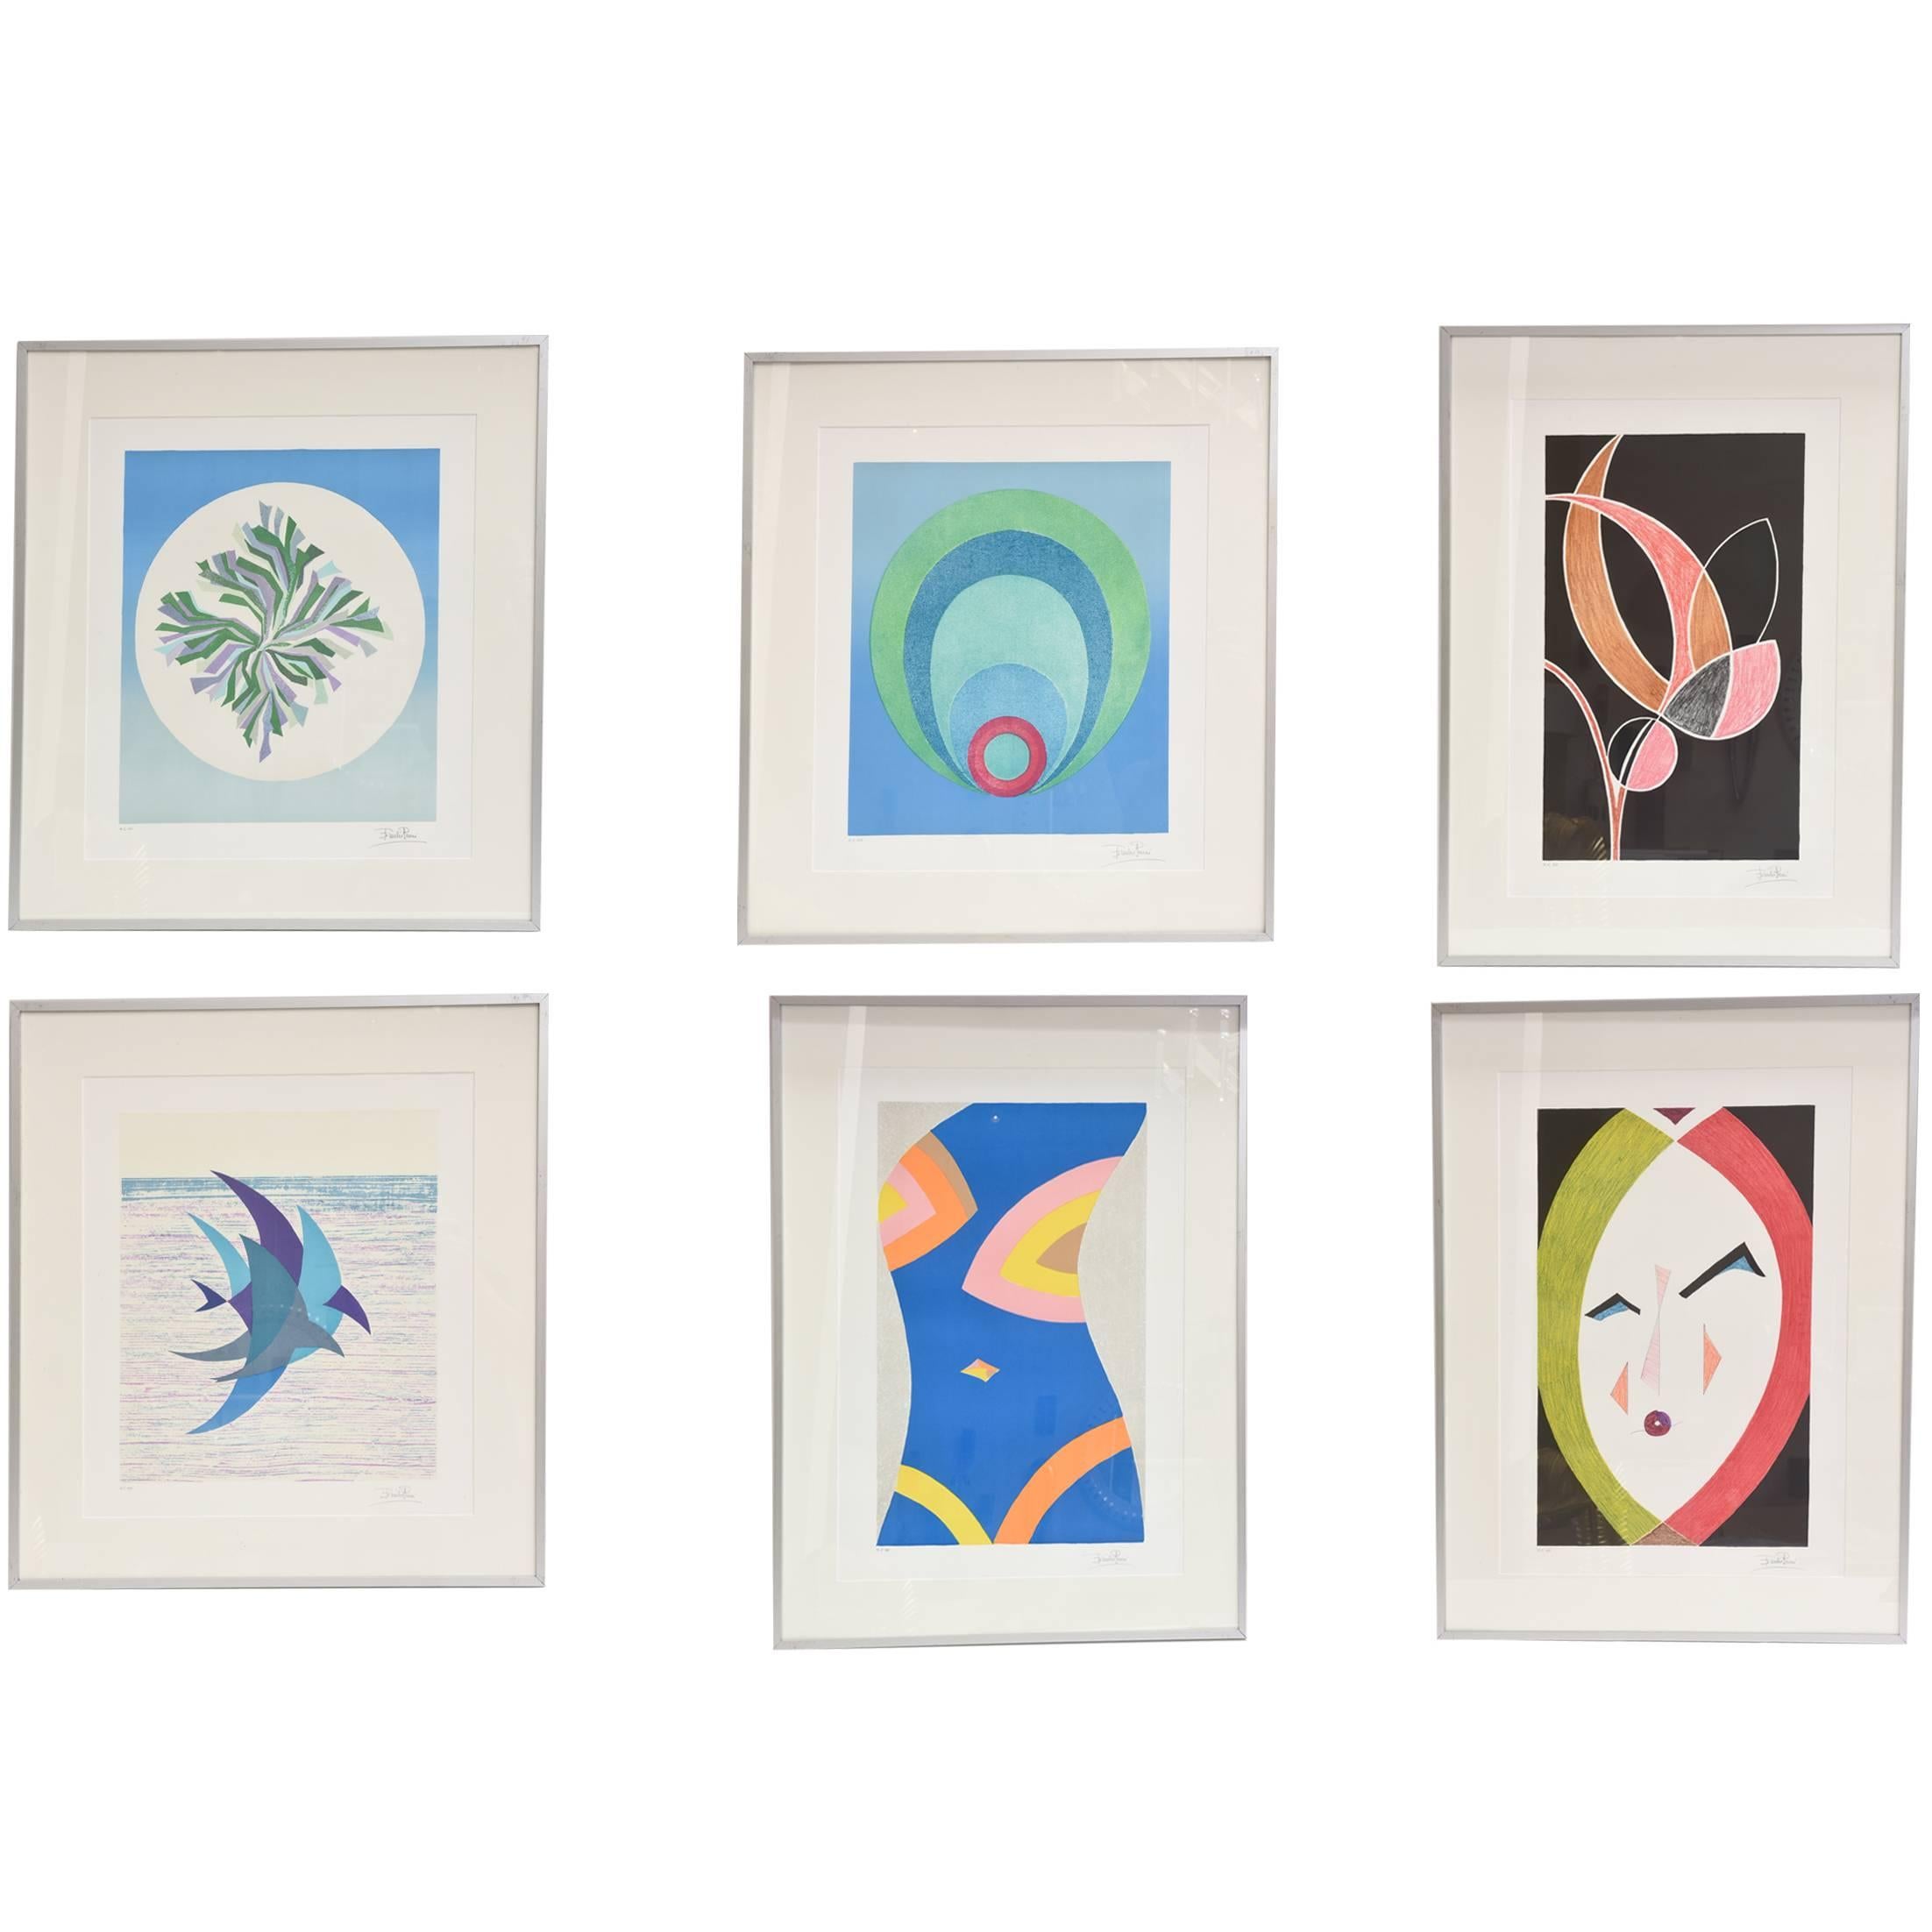 Set of Six Original Emilio Pucci Lithographs, "The Art of Emilio Pucci"